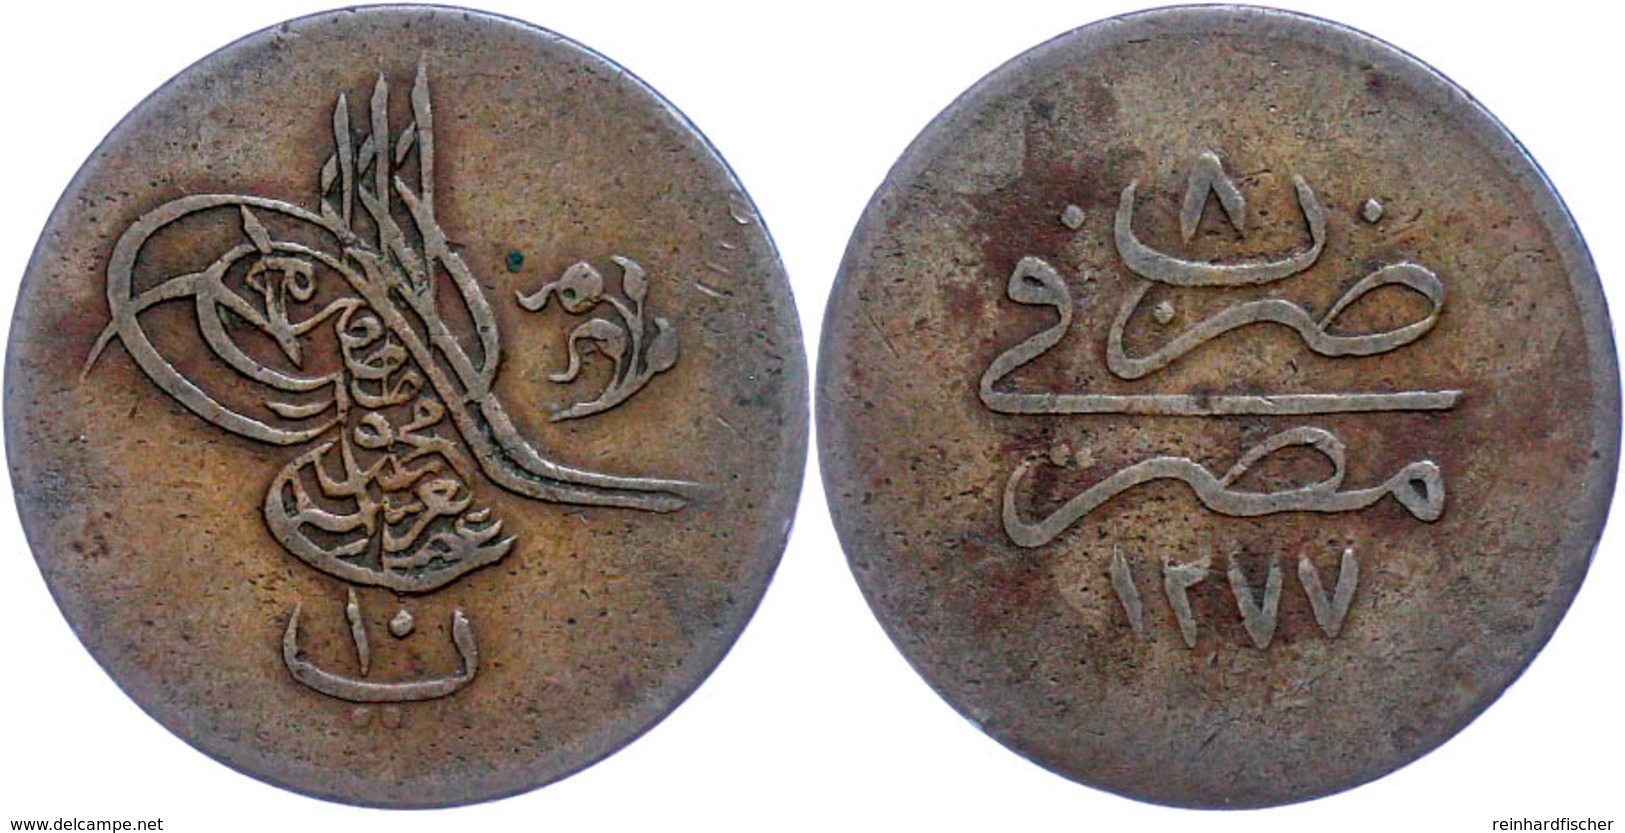 10 Para, AH 1277/8, Abdülaziz, Misir, KM 242 (Ägypten), Ss.  Ss - Orientalische Münzen